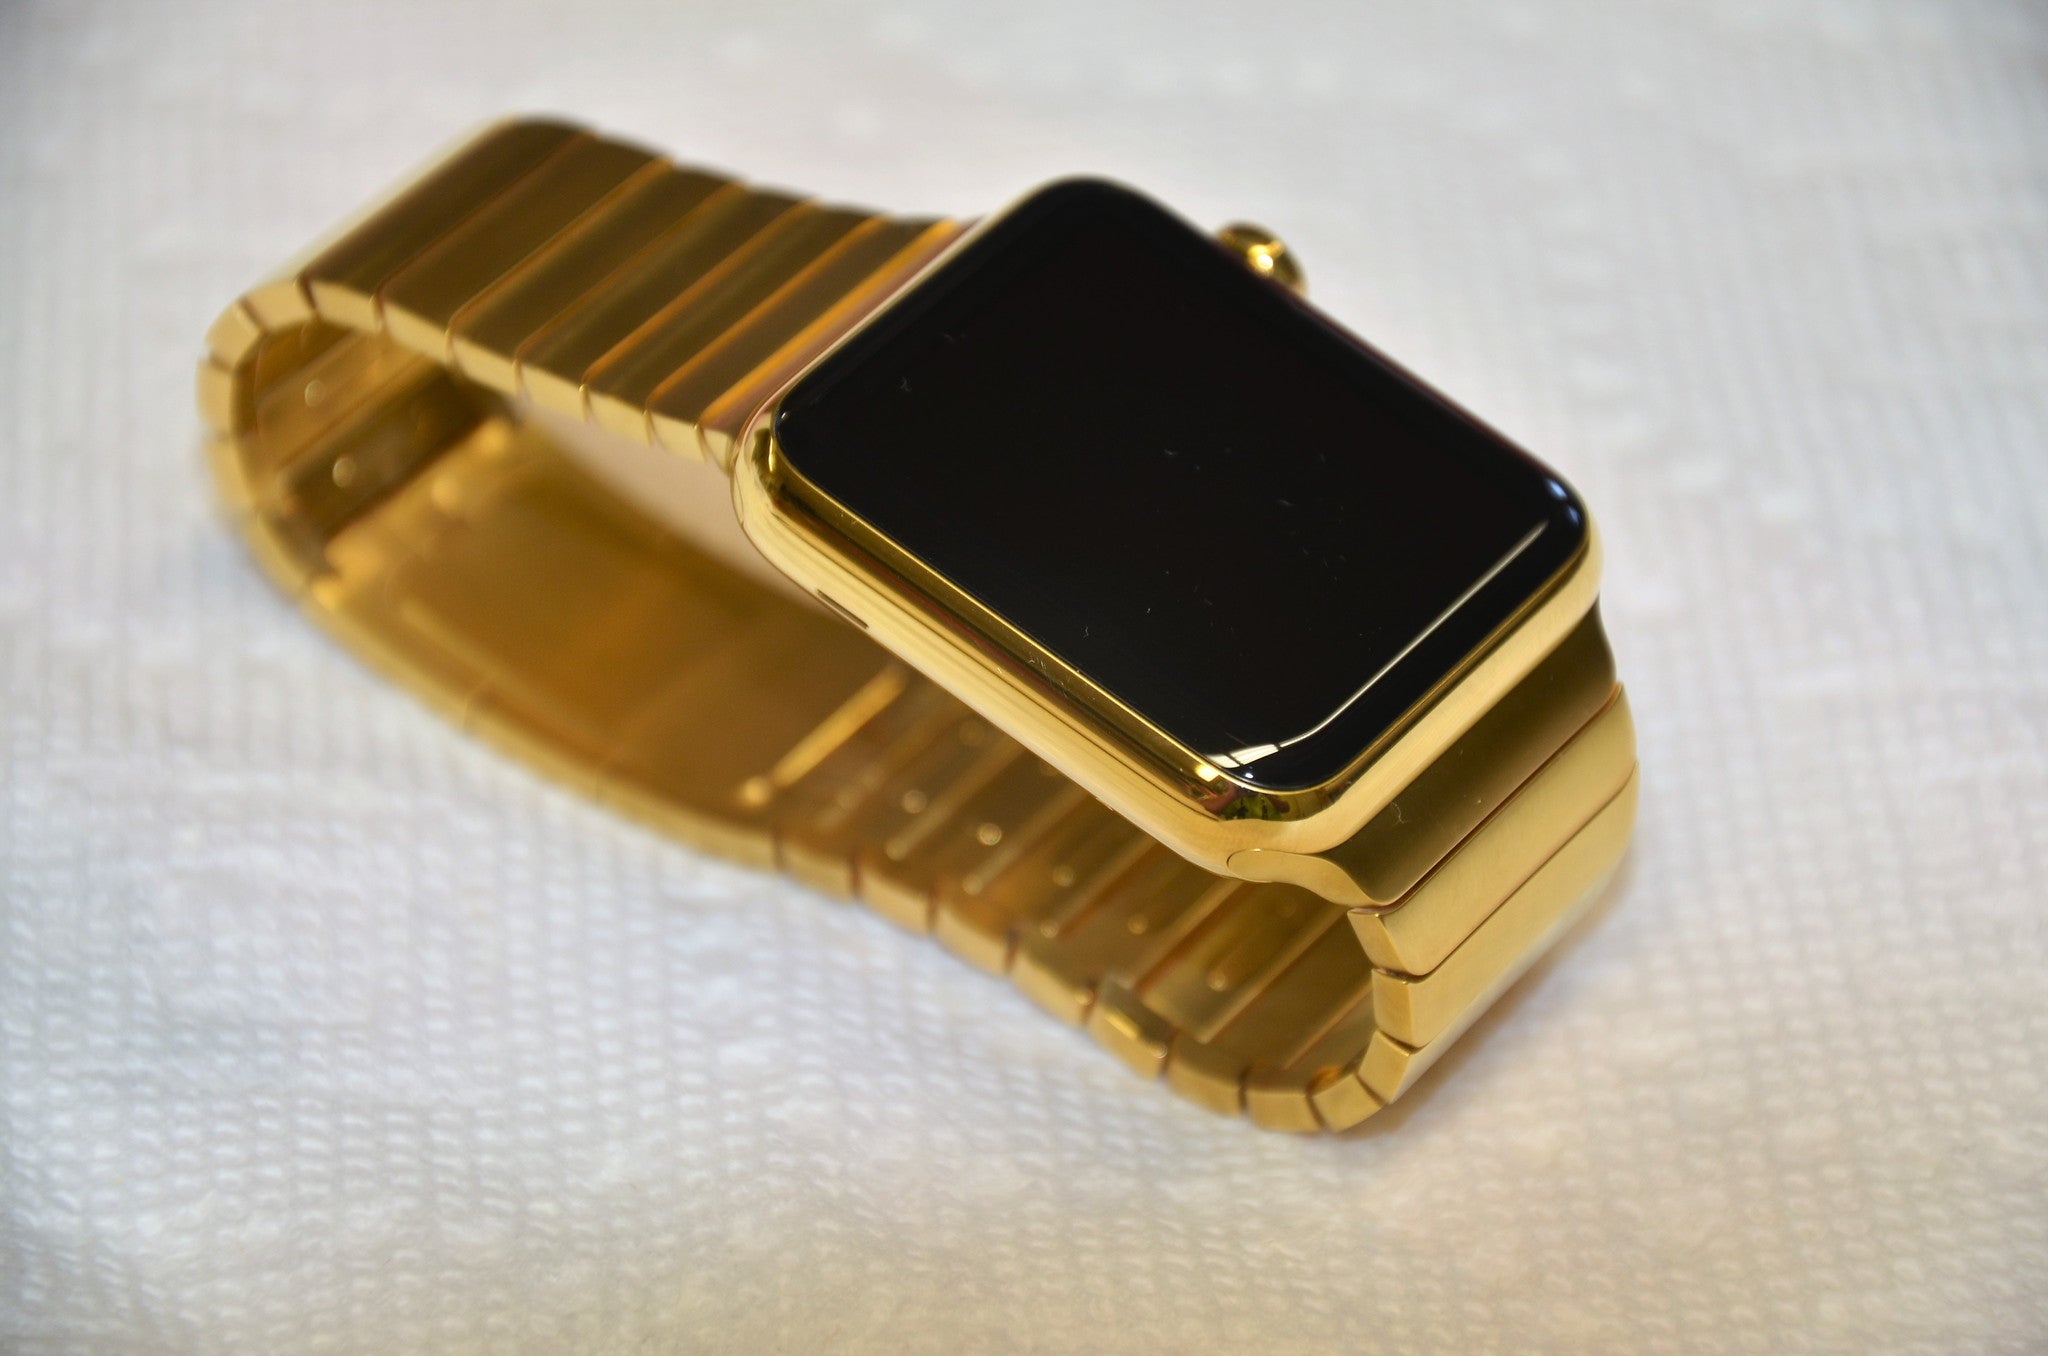 Apple watch gold stainless. Золотые АПЛ вотч. Эппл вотч золотые. Золотой браслет для Эппл вотч. Эппл вотч золотой корпус.